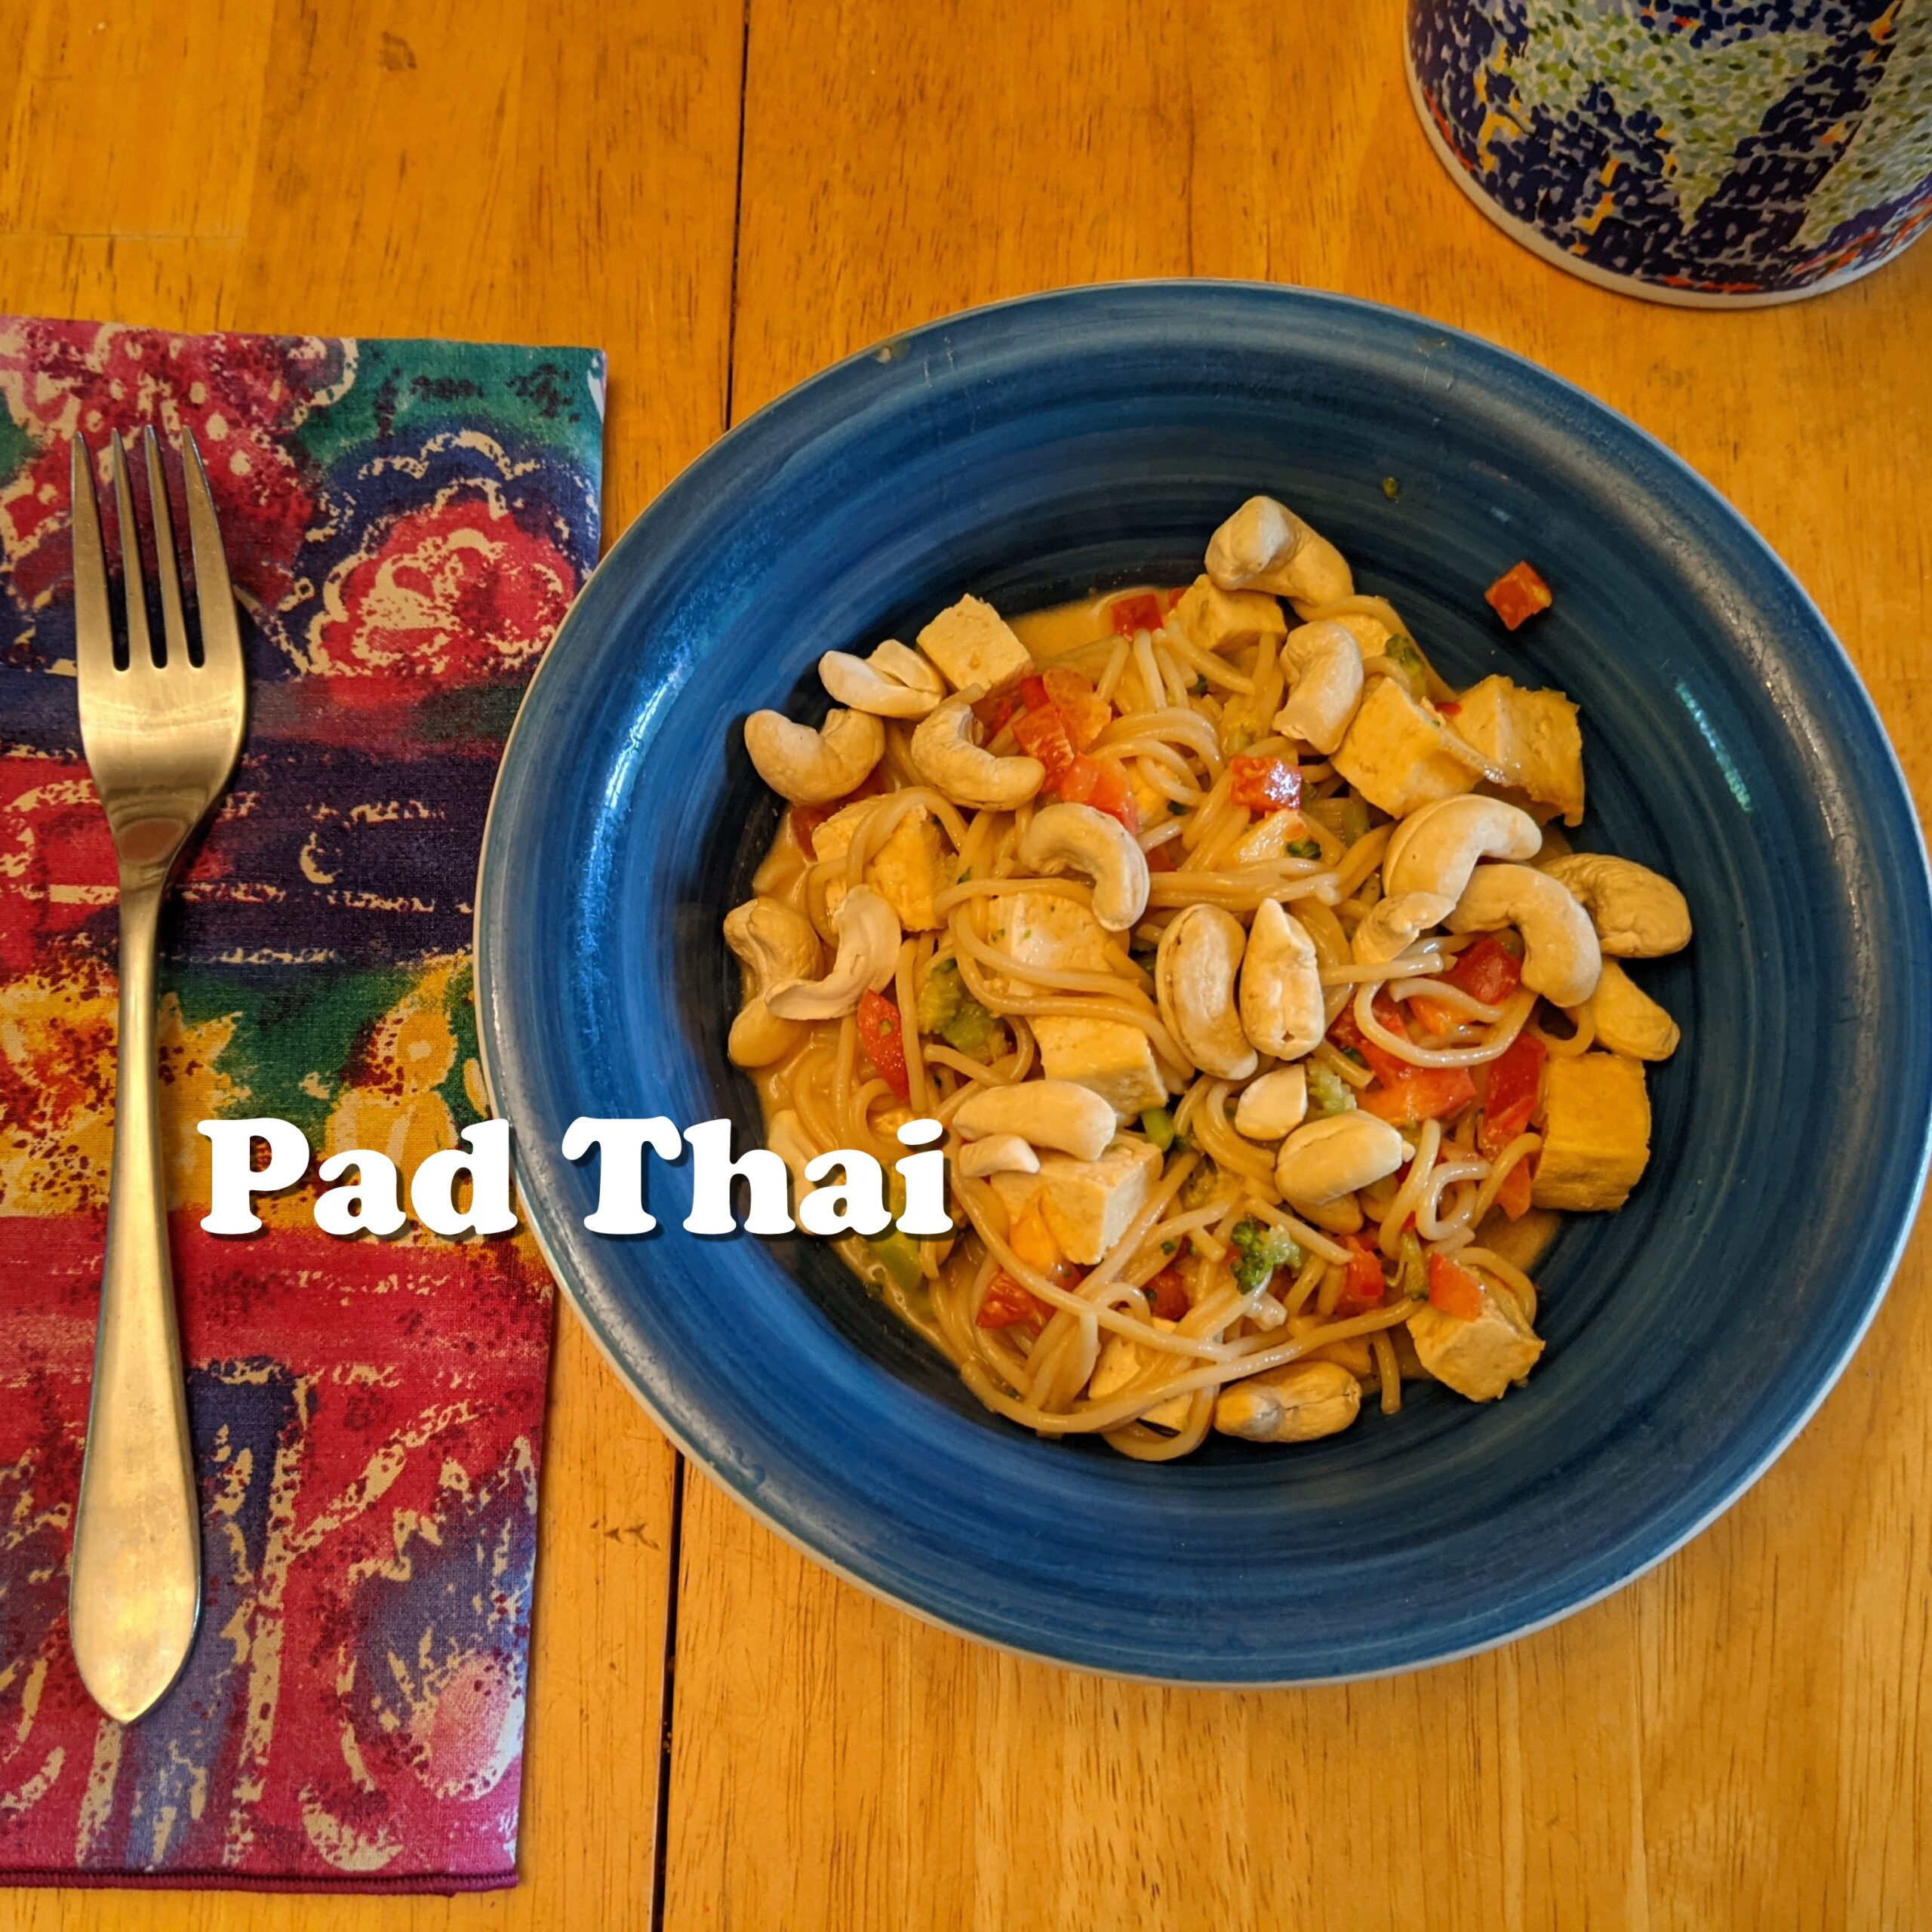 Homemade Gluten Free Pad Thai - makes delicious dinner easy!